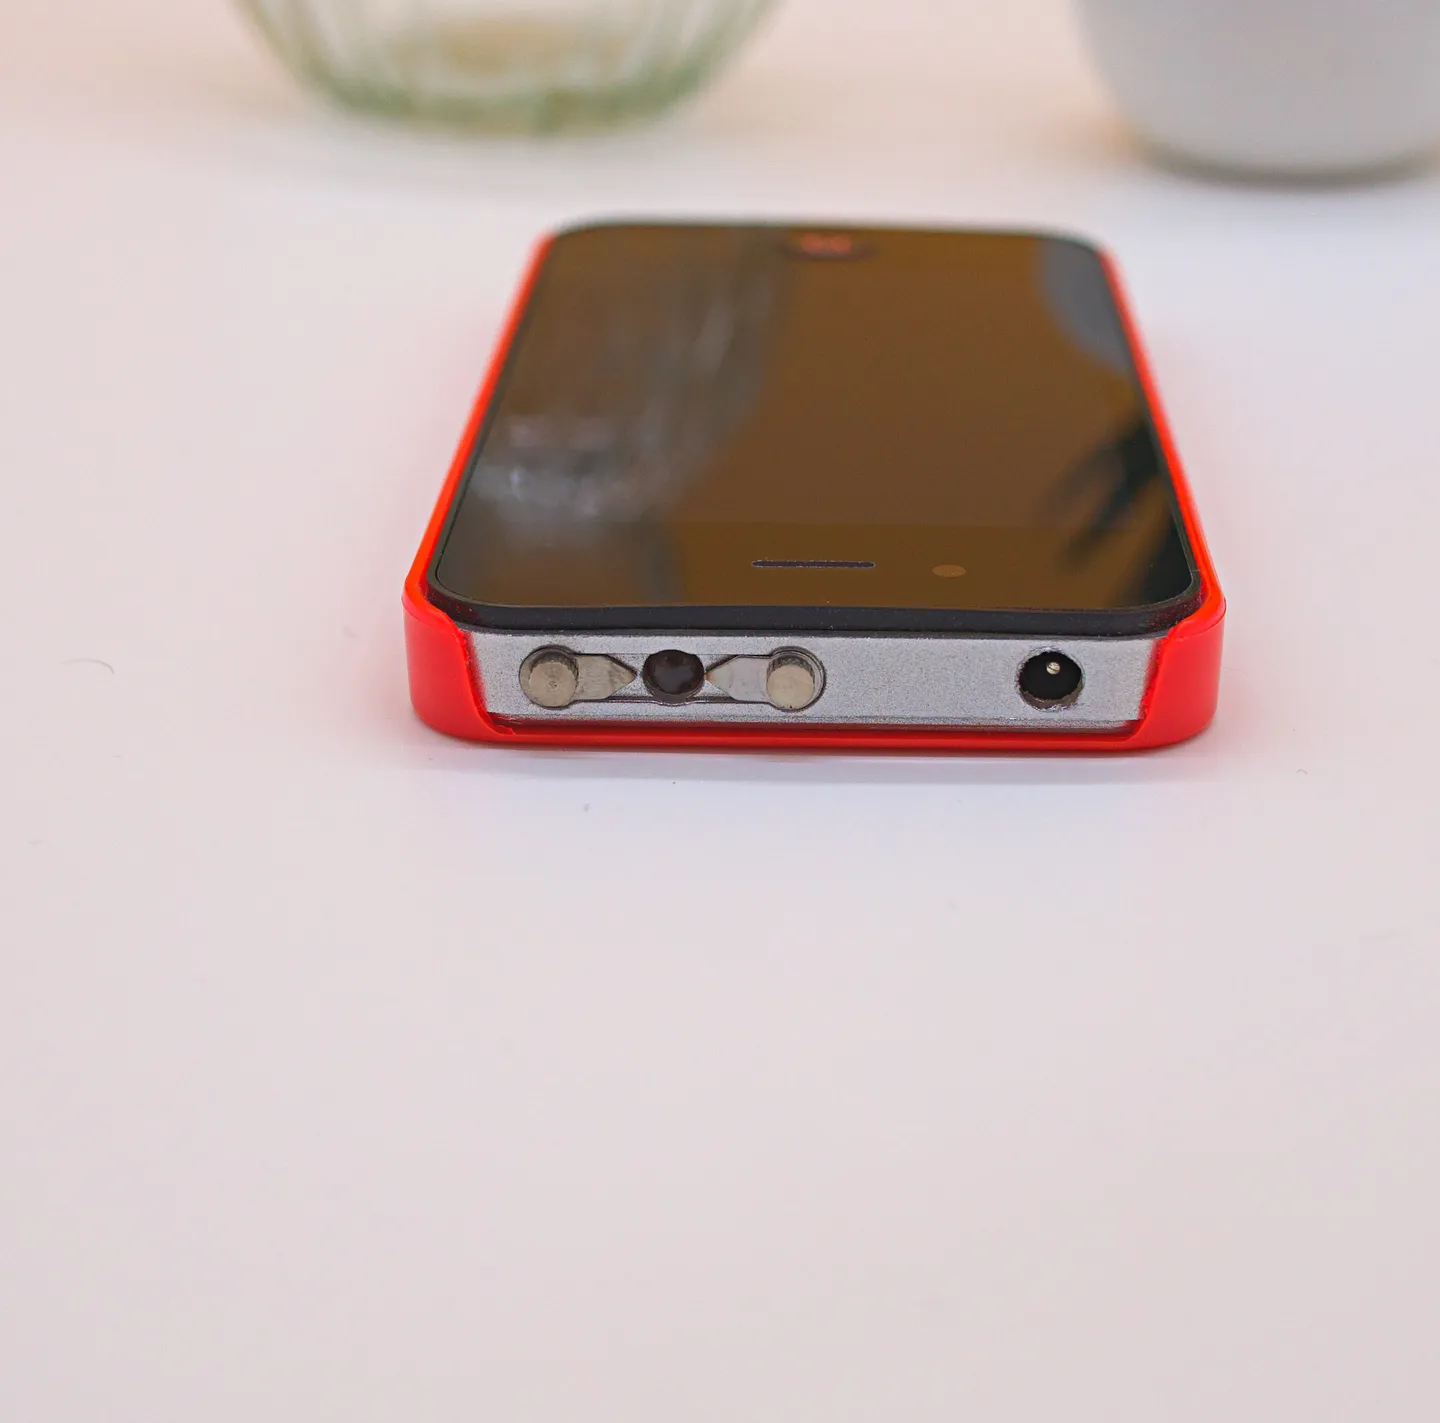 Elektroschocker & Taser - Iphone Shocker Taser, 2 400 000 Volt, Diskretion garantiert (Rote Version)